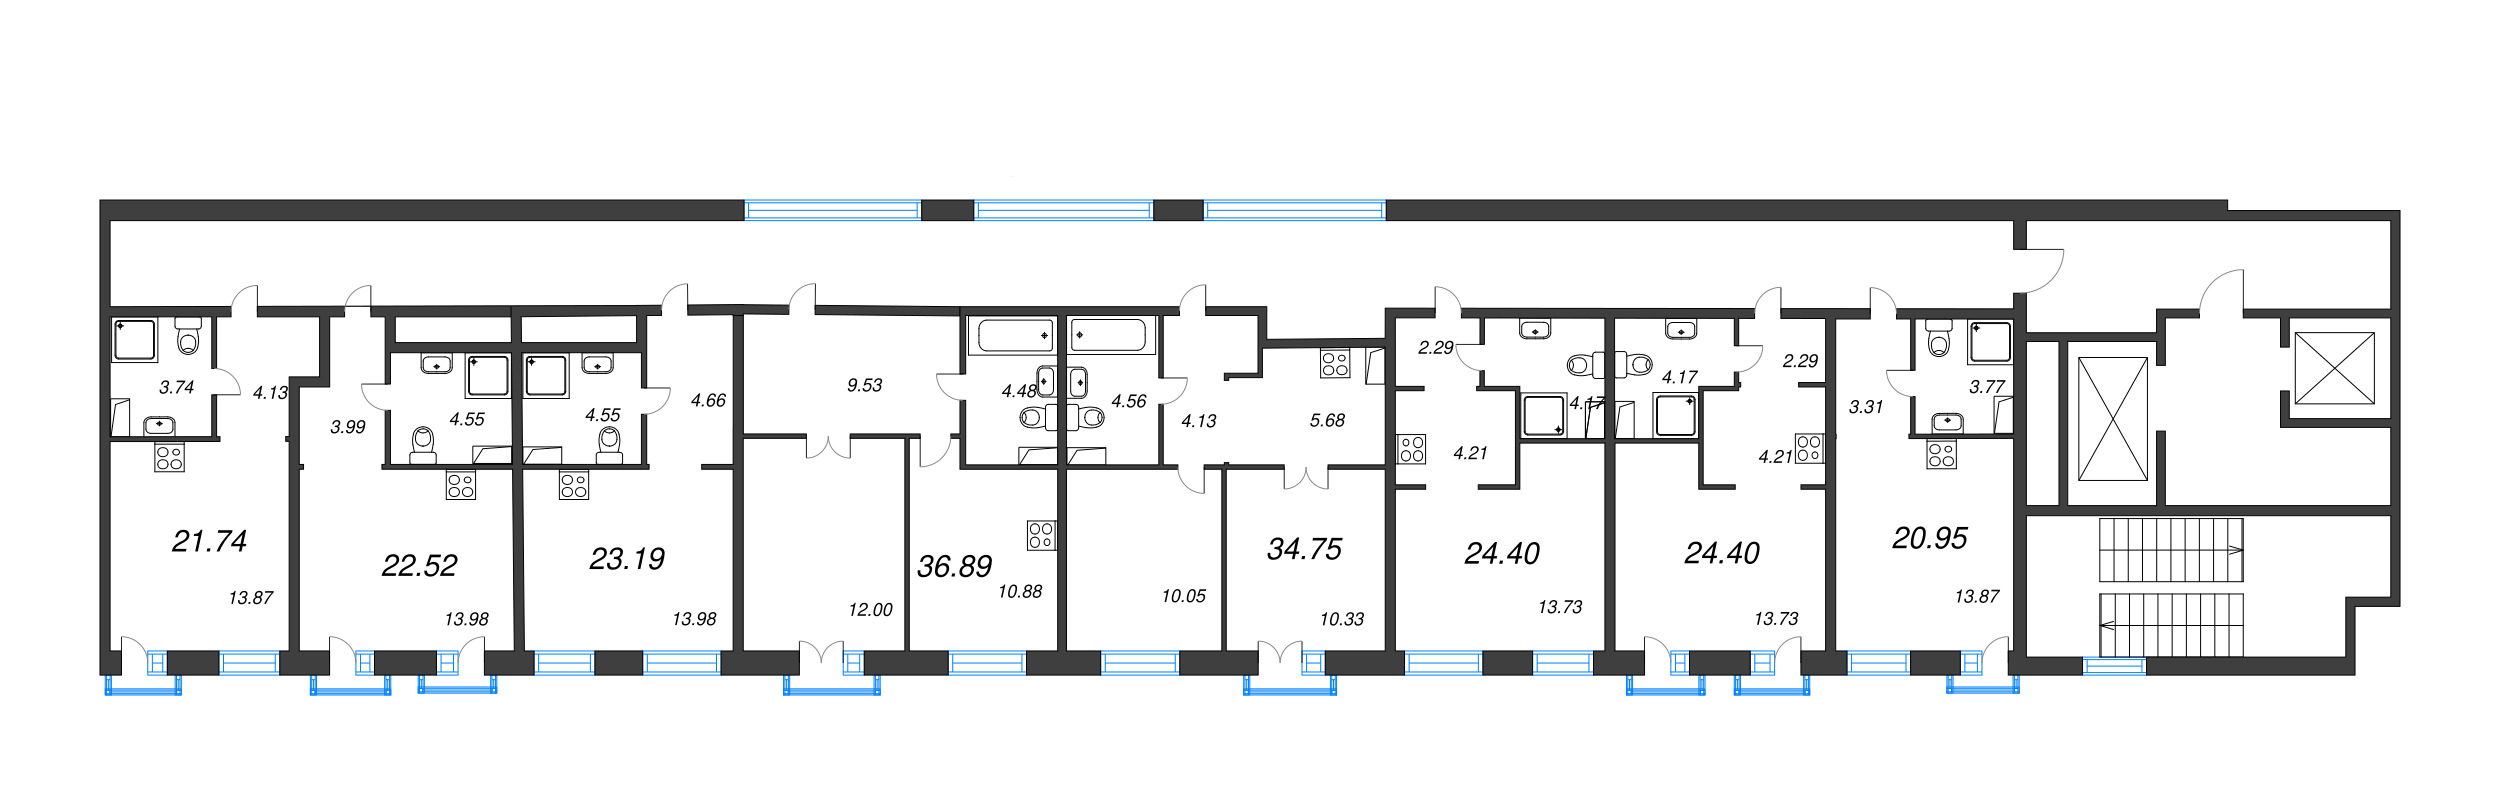 2-комнатная (Евро) квартира, 36.89 м² - планировка этажа